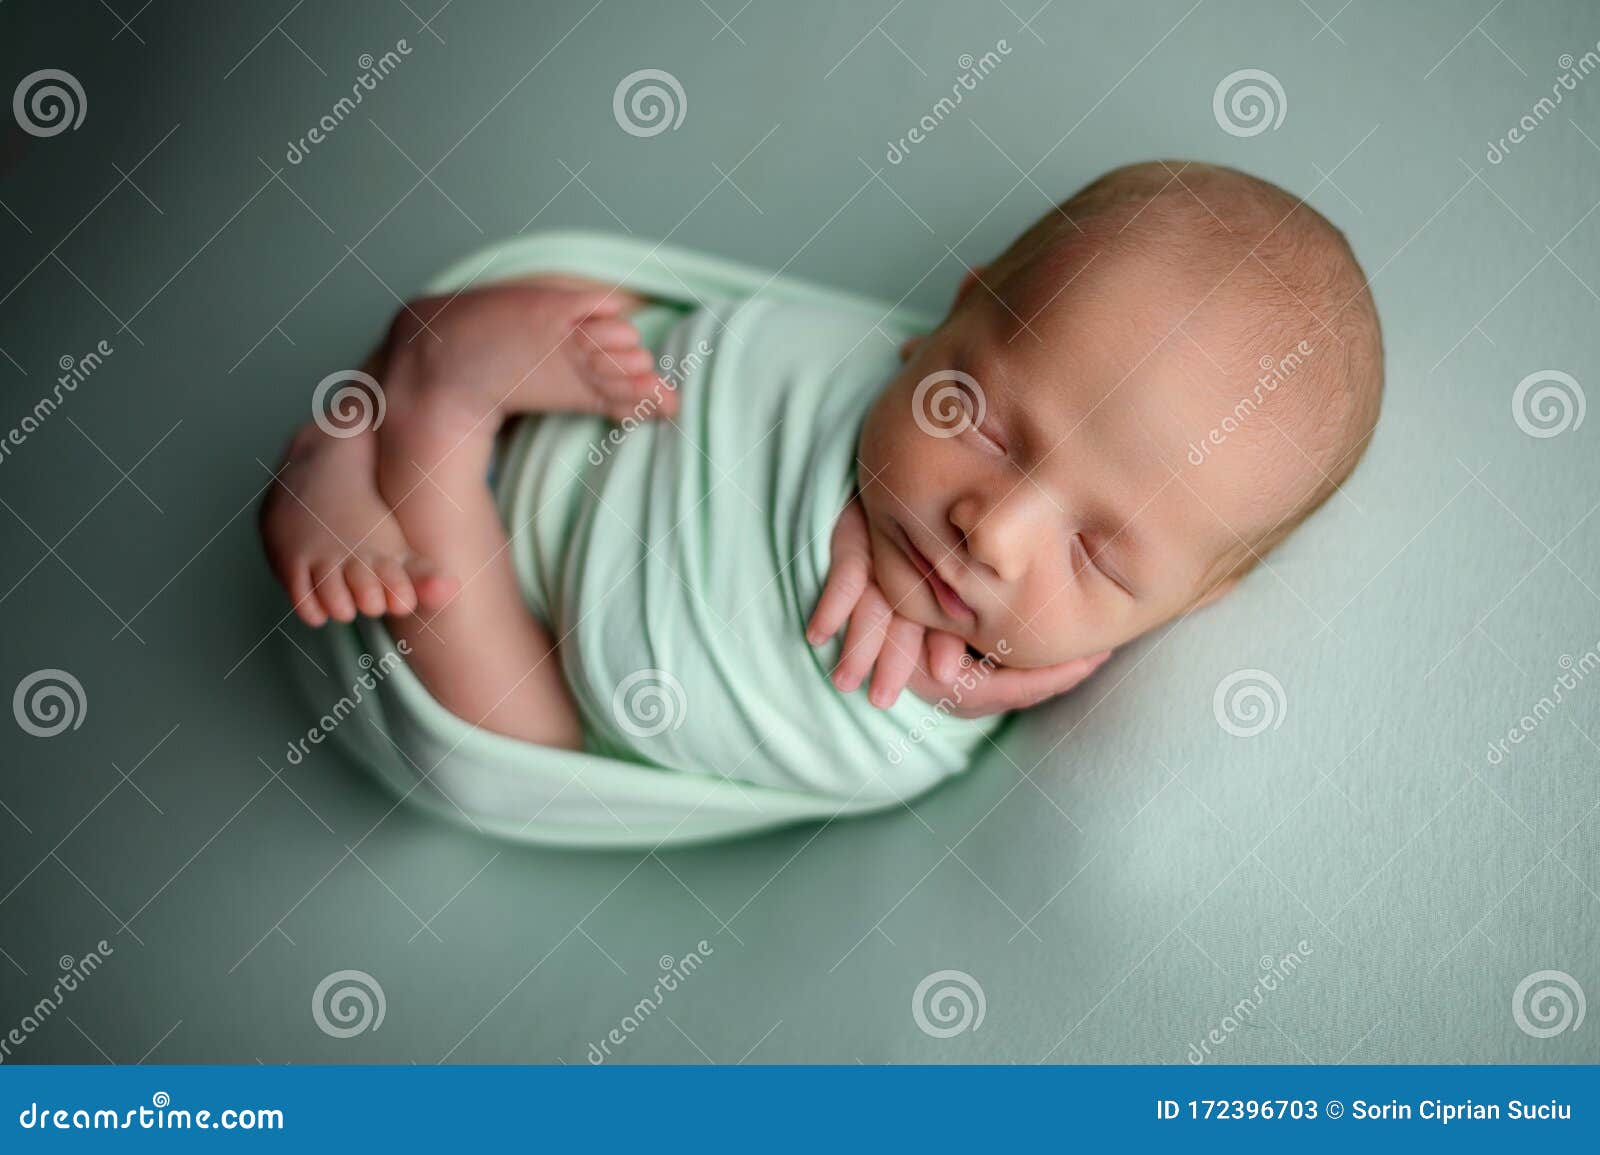 newborn baby boy sleeping confort pose on a beanbag